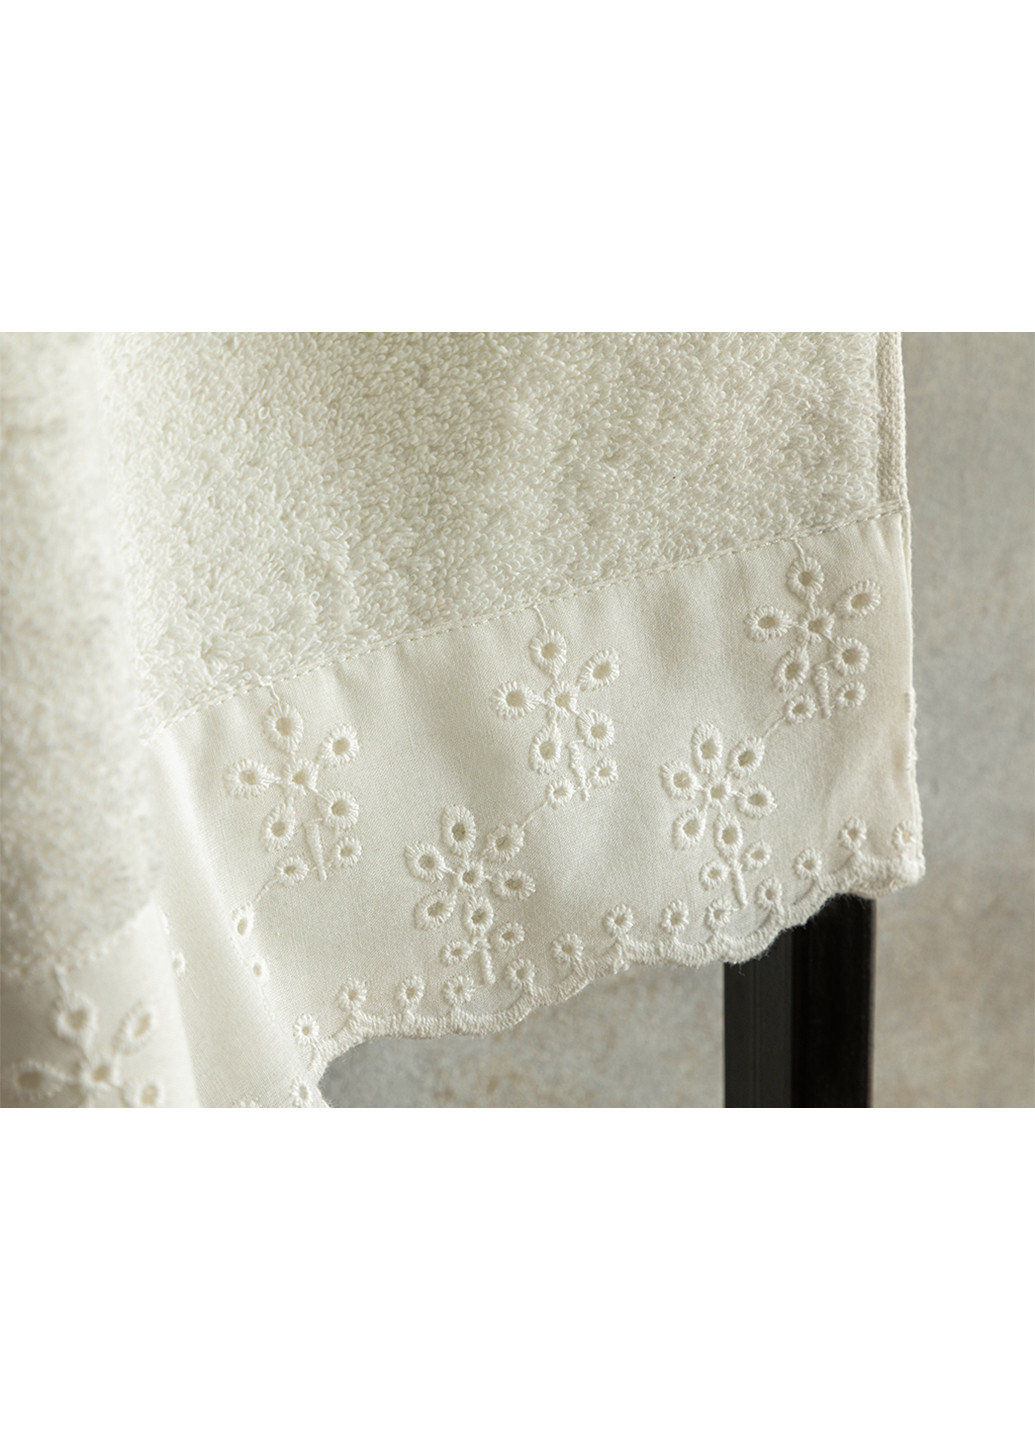 English Home полотенце, 50х70 см однотонный белый производство - Турция